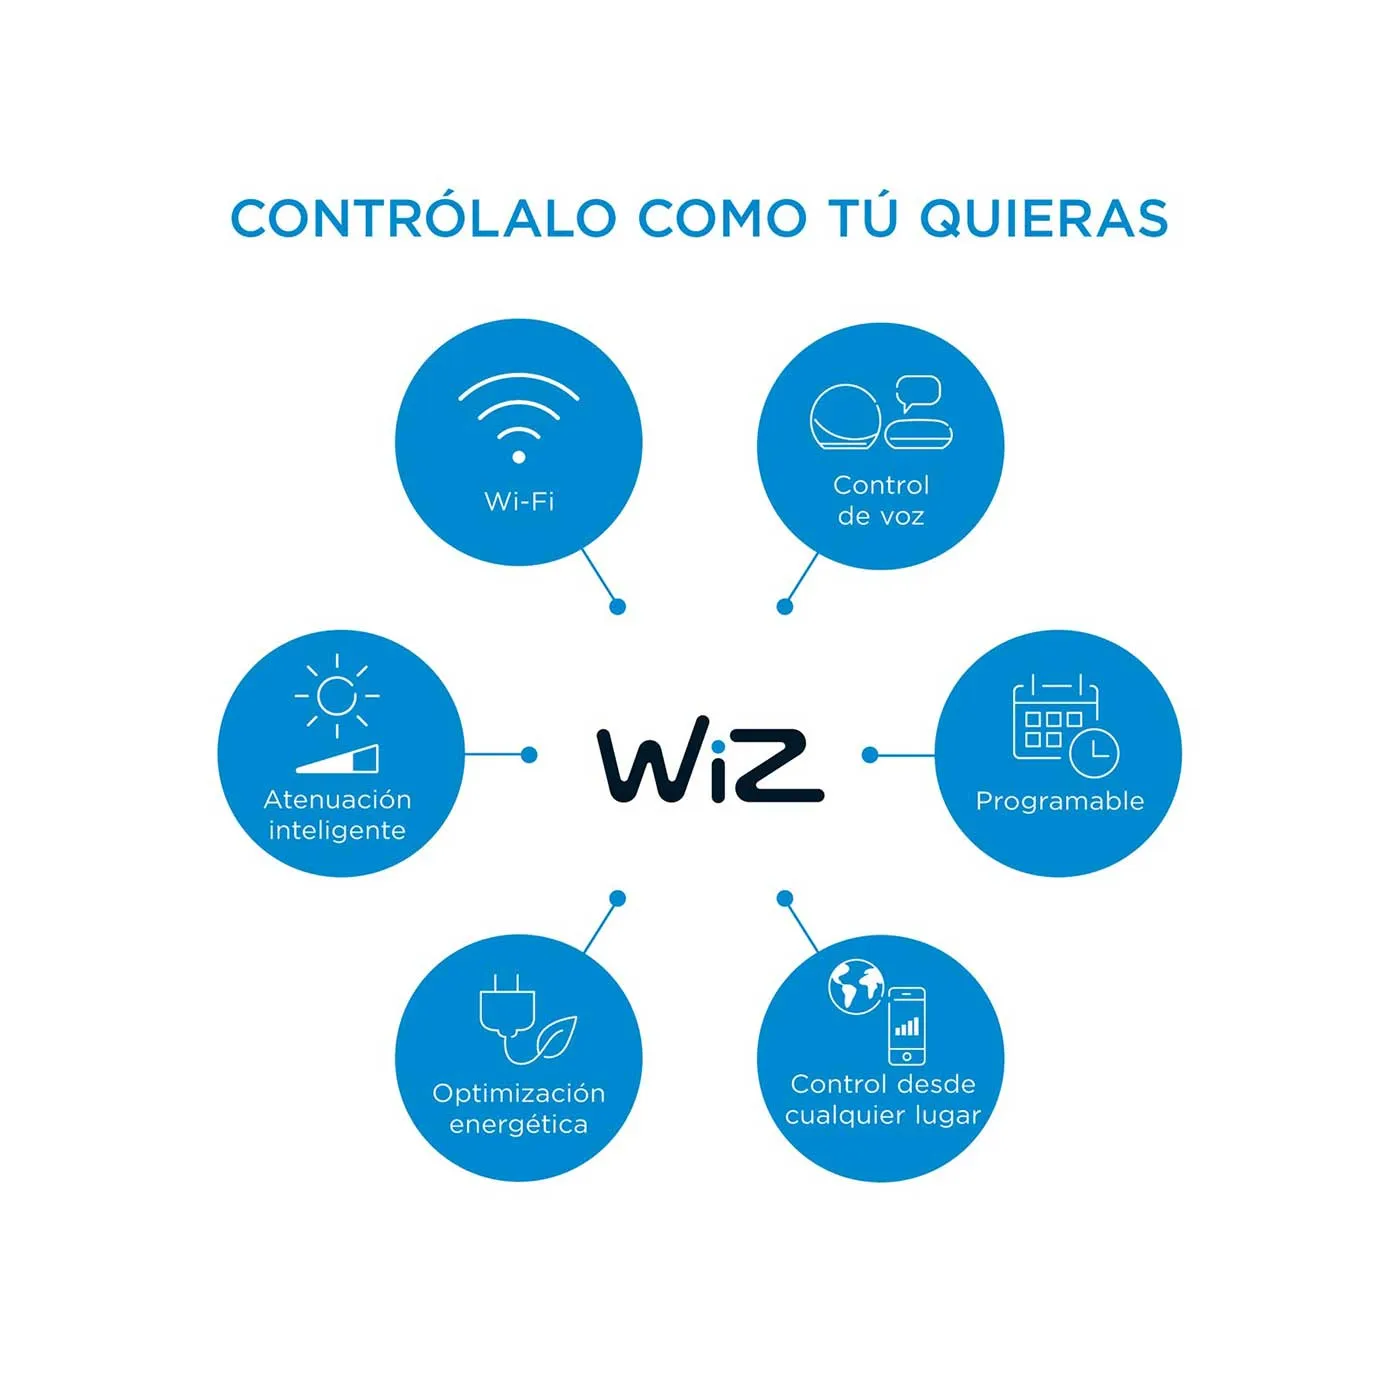 Tira Led WIZ WiFI Kit de Inicio RGB 2 Metros